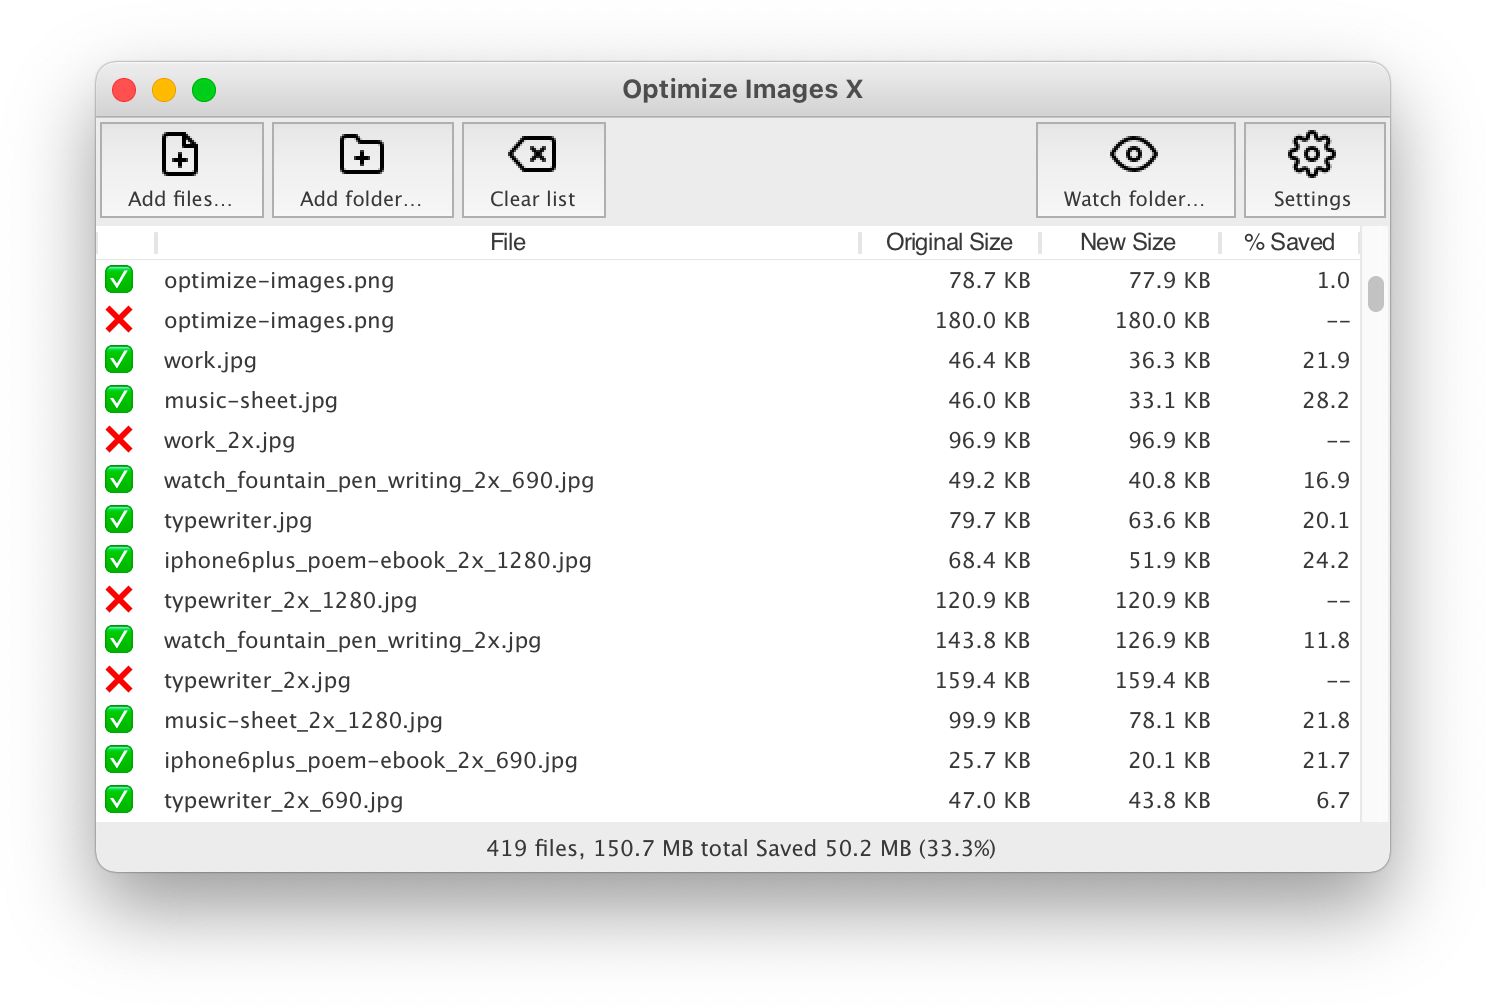 Optimize Images X - Main Window